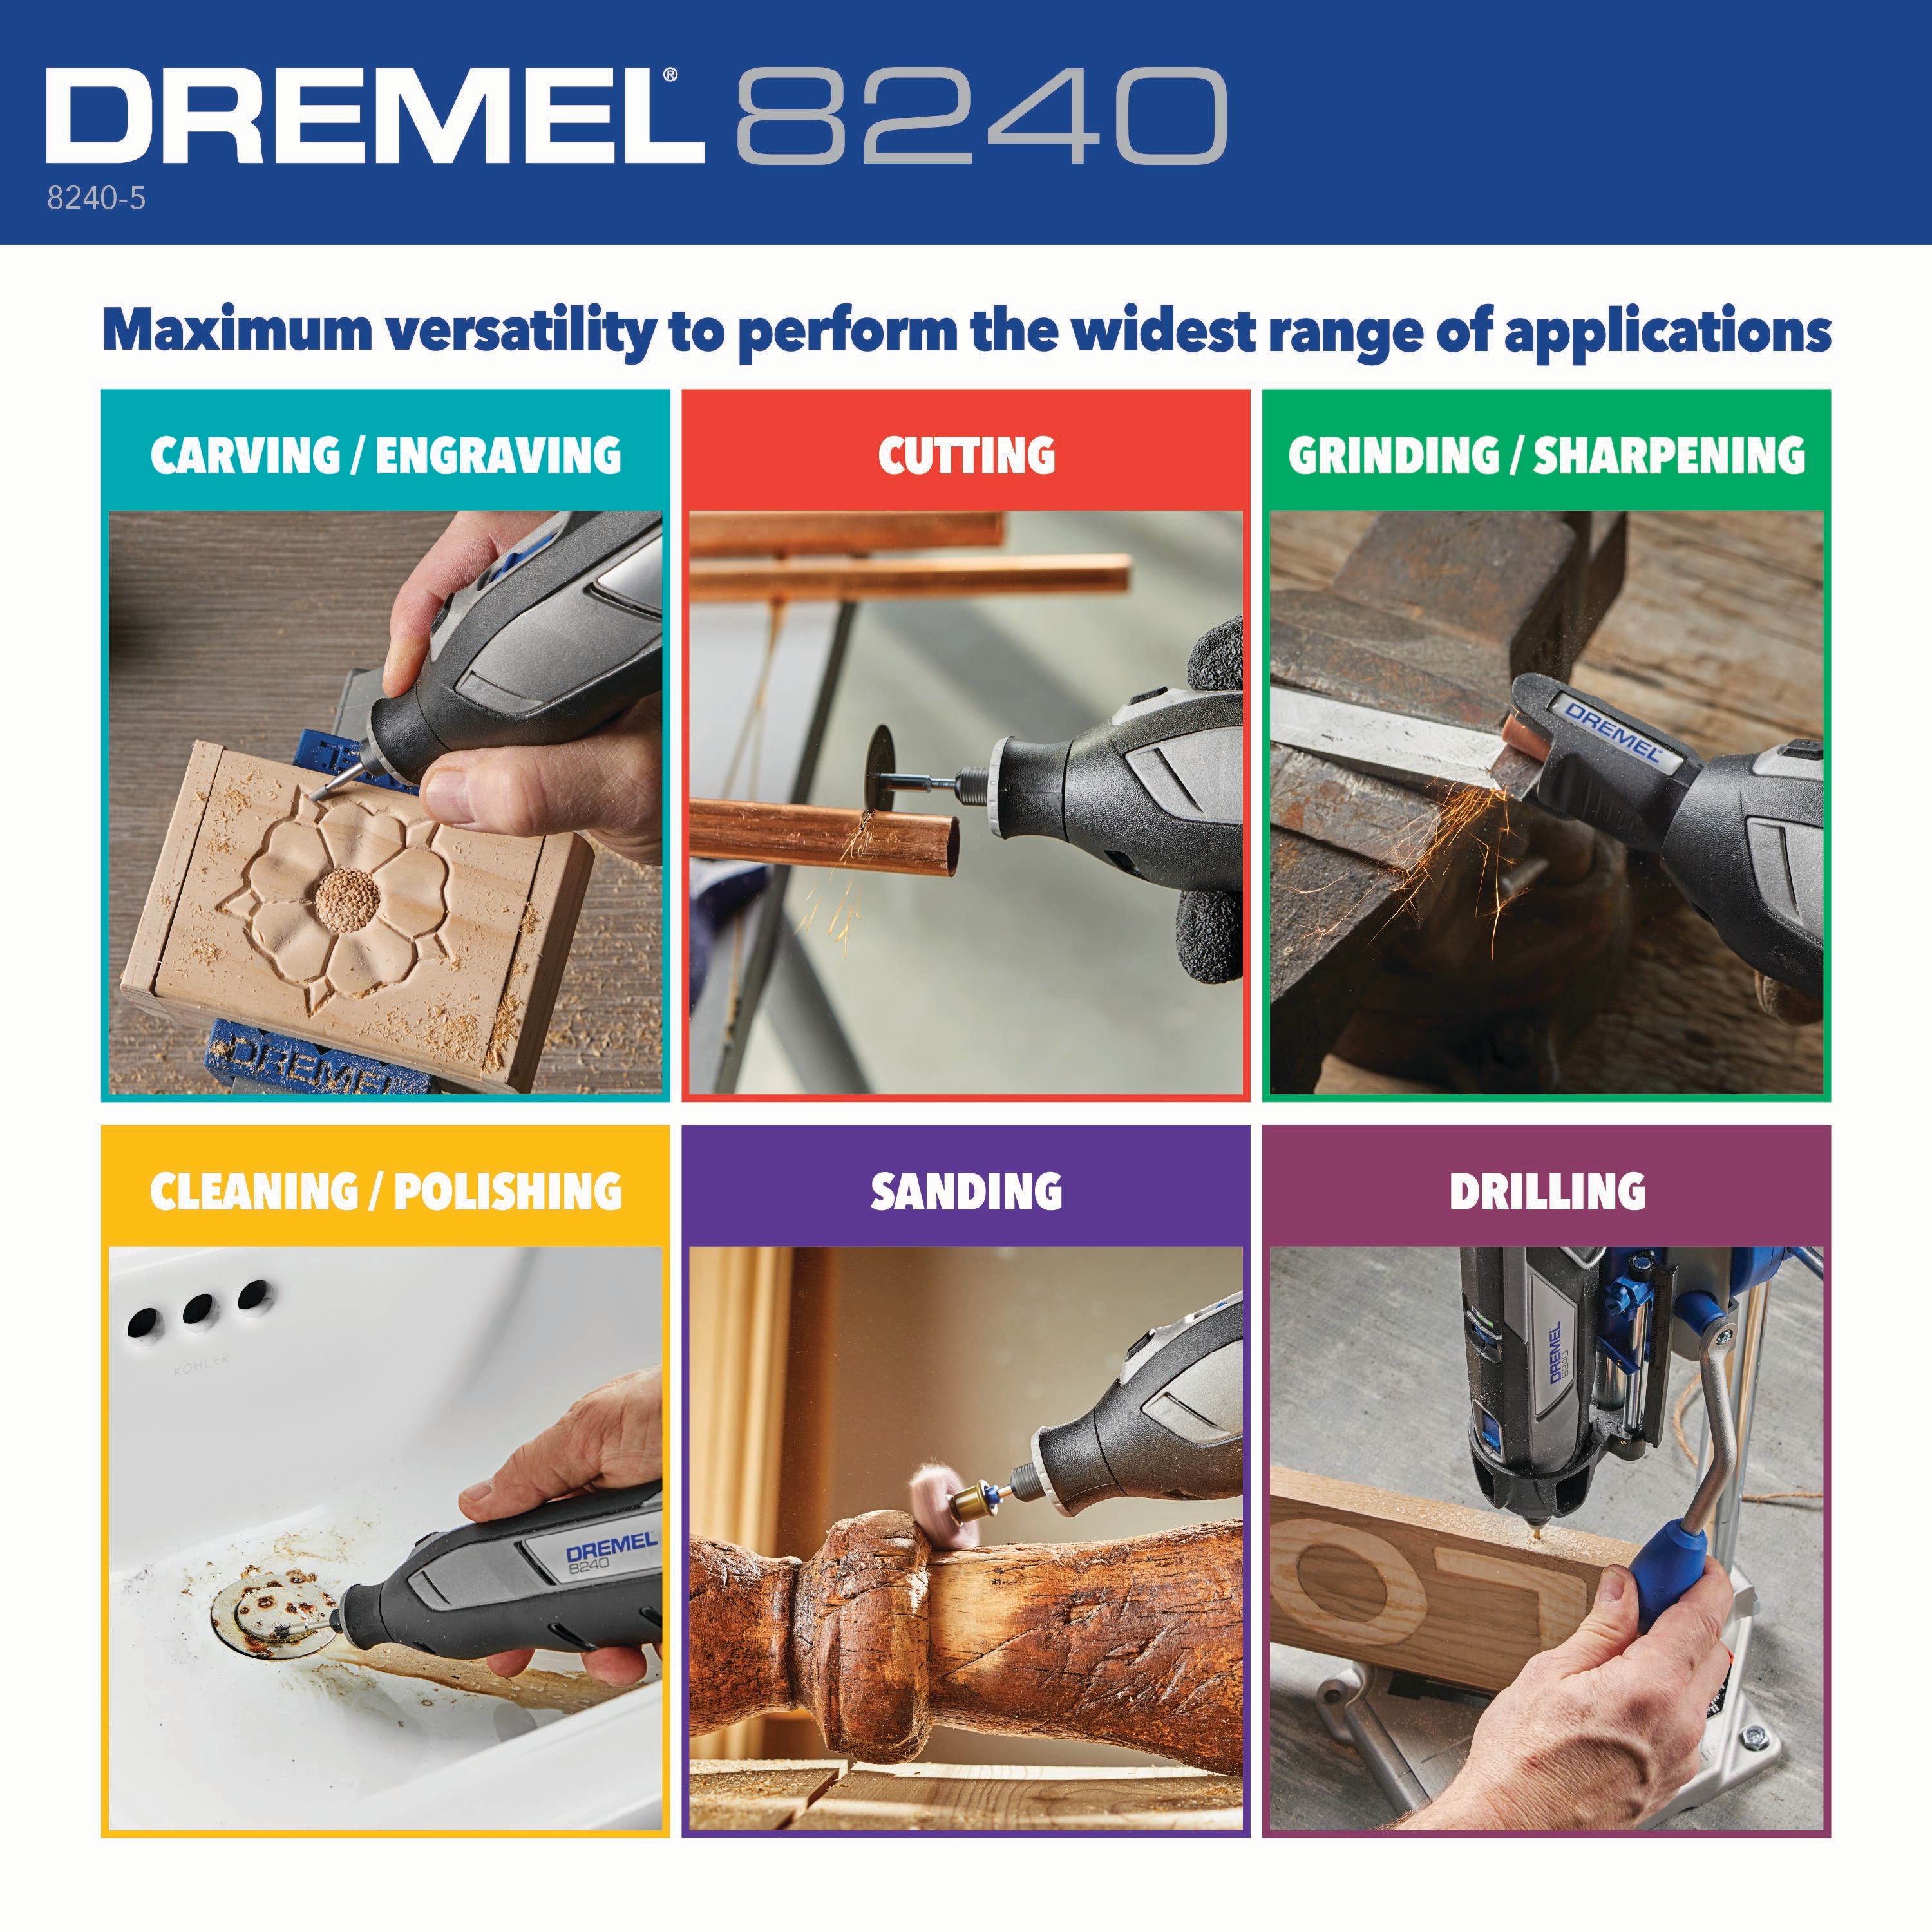 Dremel 12V Cordless Rotary Tool Kit - 8240-5